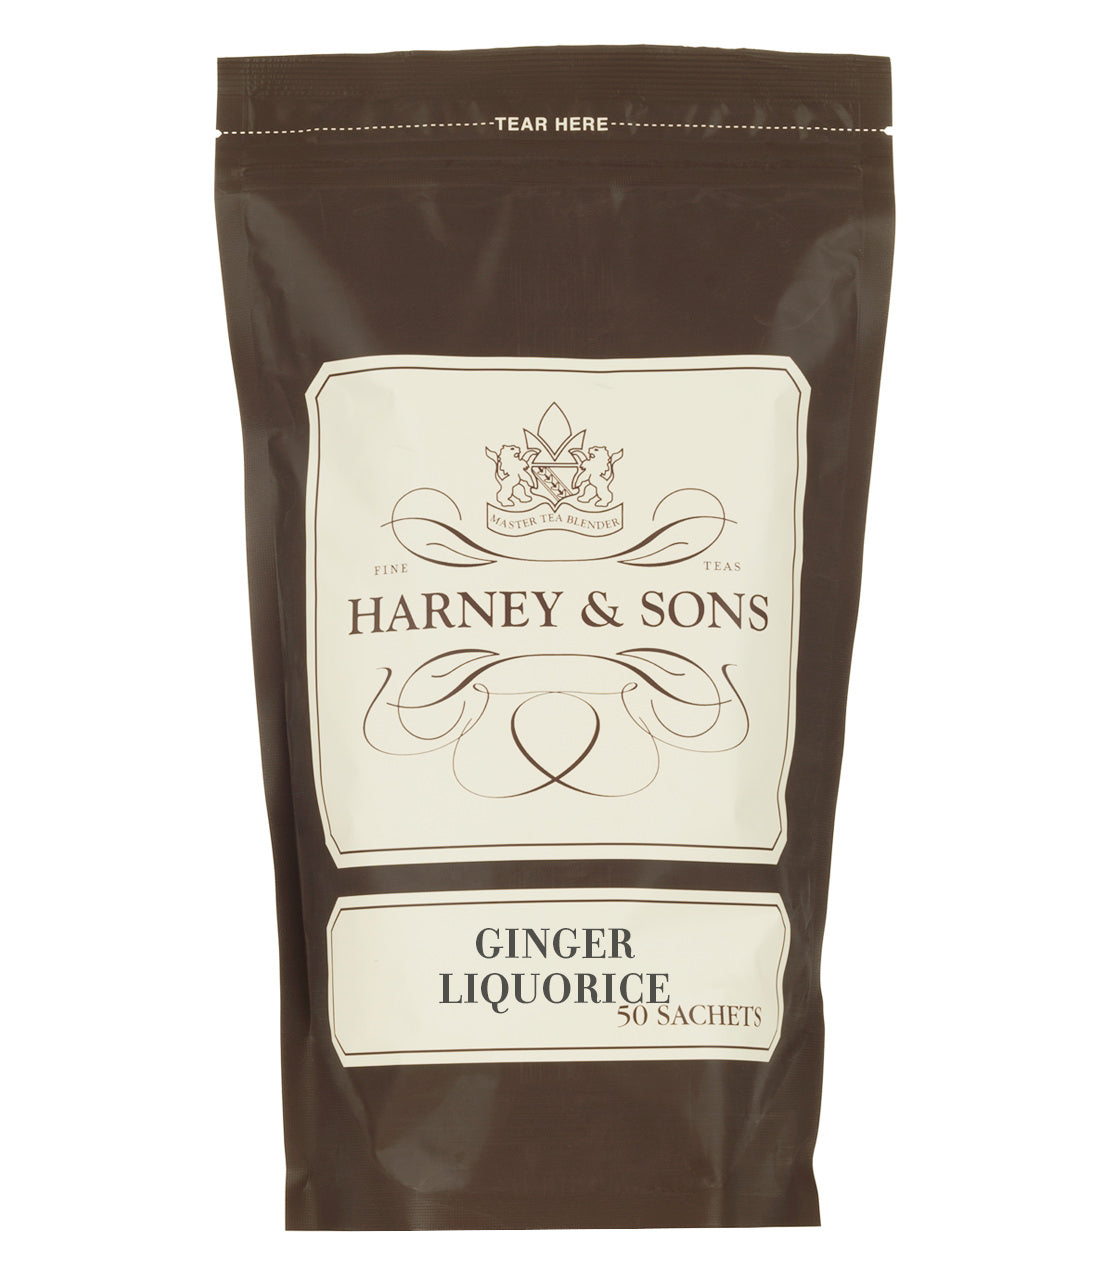 Ginger Liquorice, Bag of 50 Sachets - Sachets Bag of 50 Sachets - Harney & Sons Fine Teas